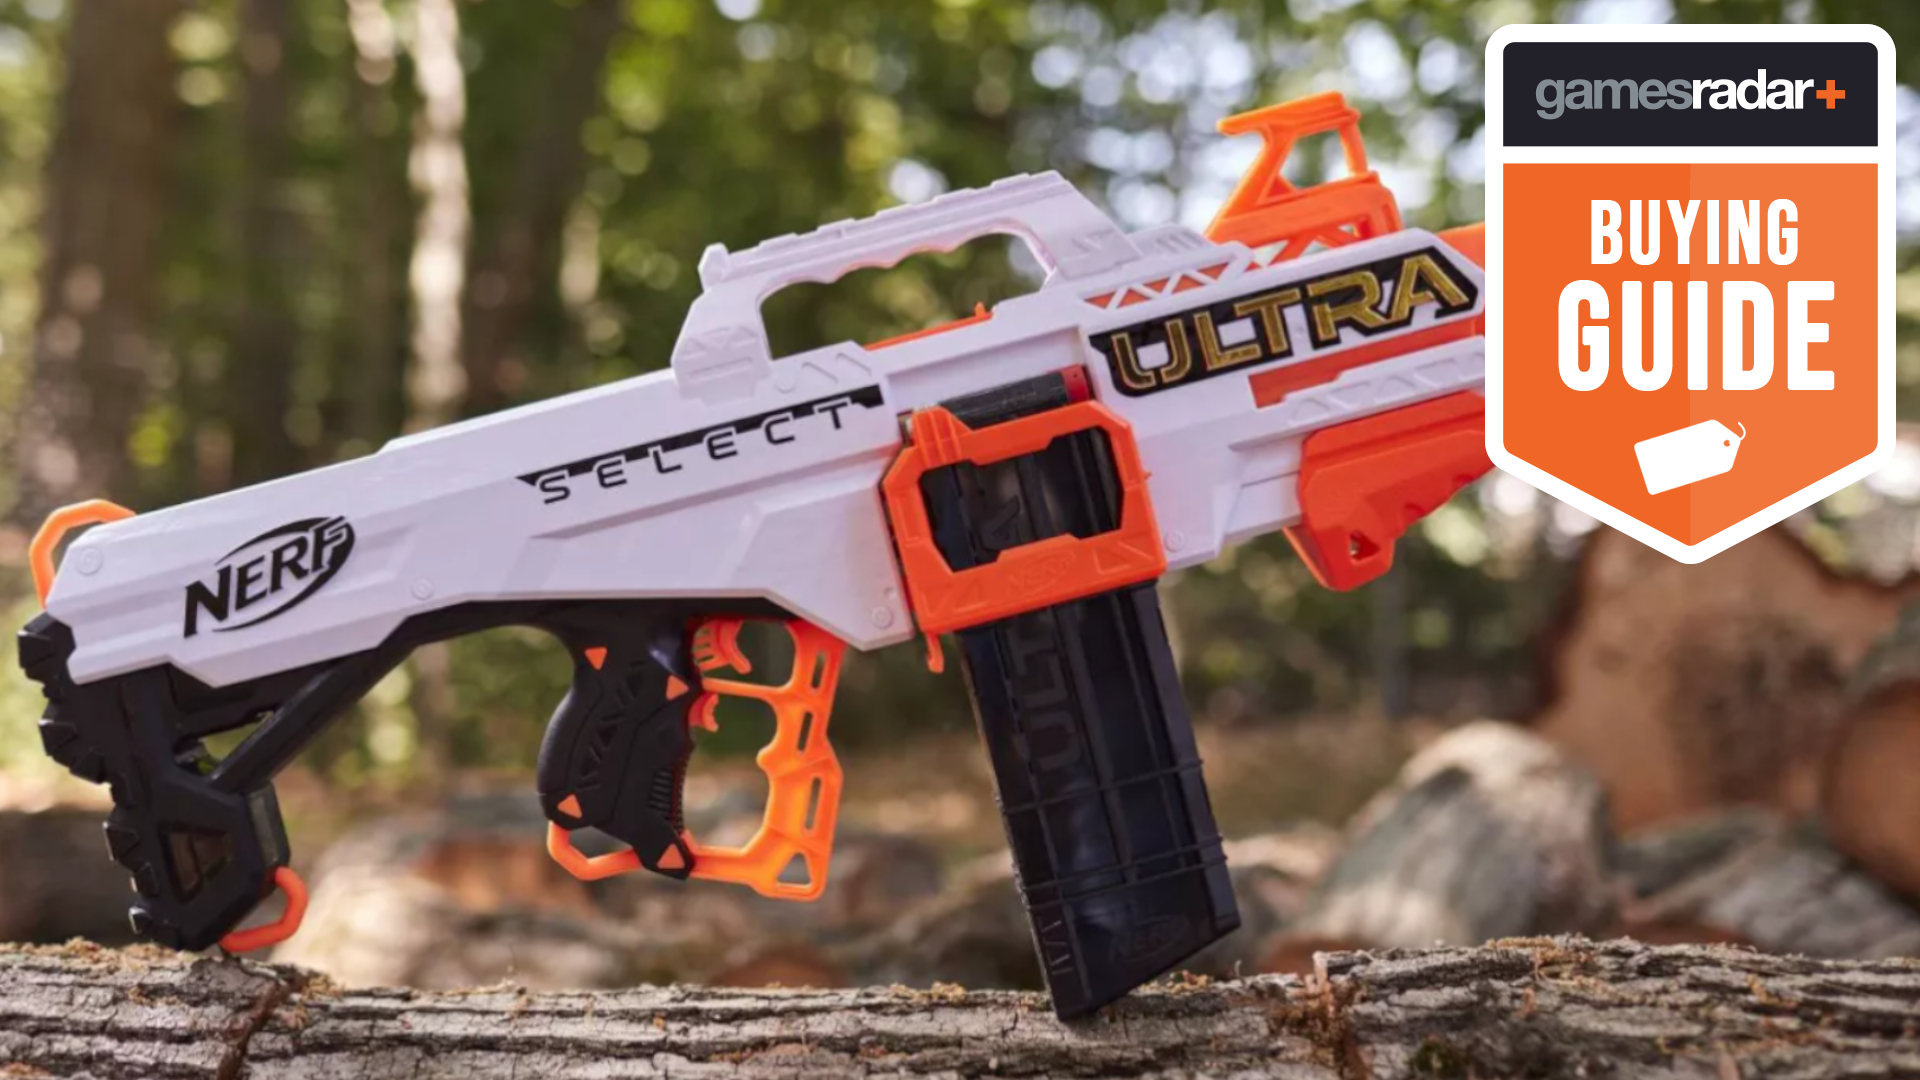 Fortnite Toy NERF Gun Elite Blaster Pistol 6 Darts For Kids Fun Outdoor Activity 